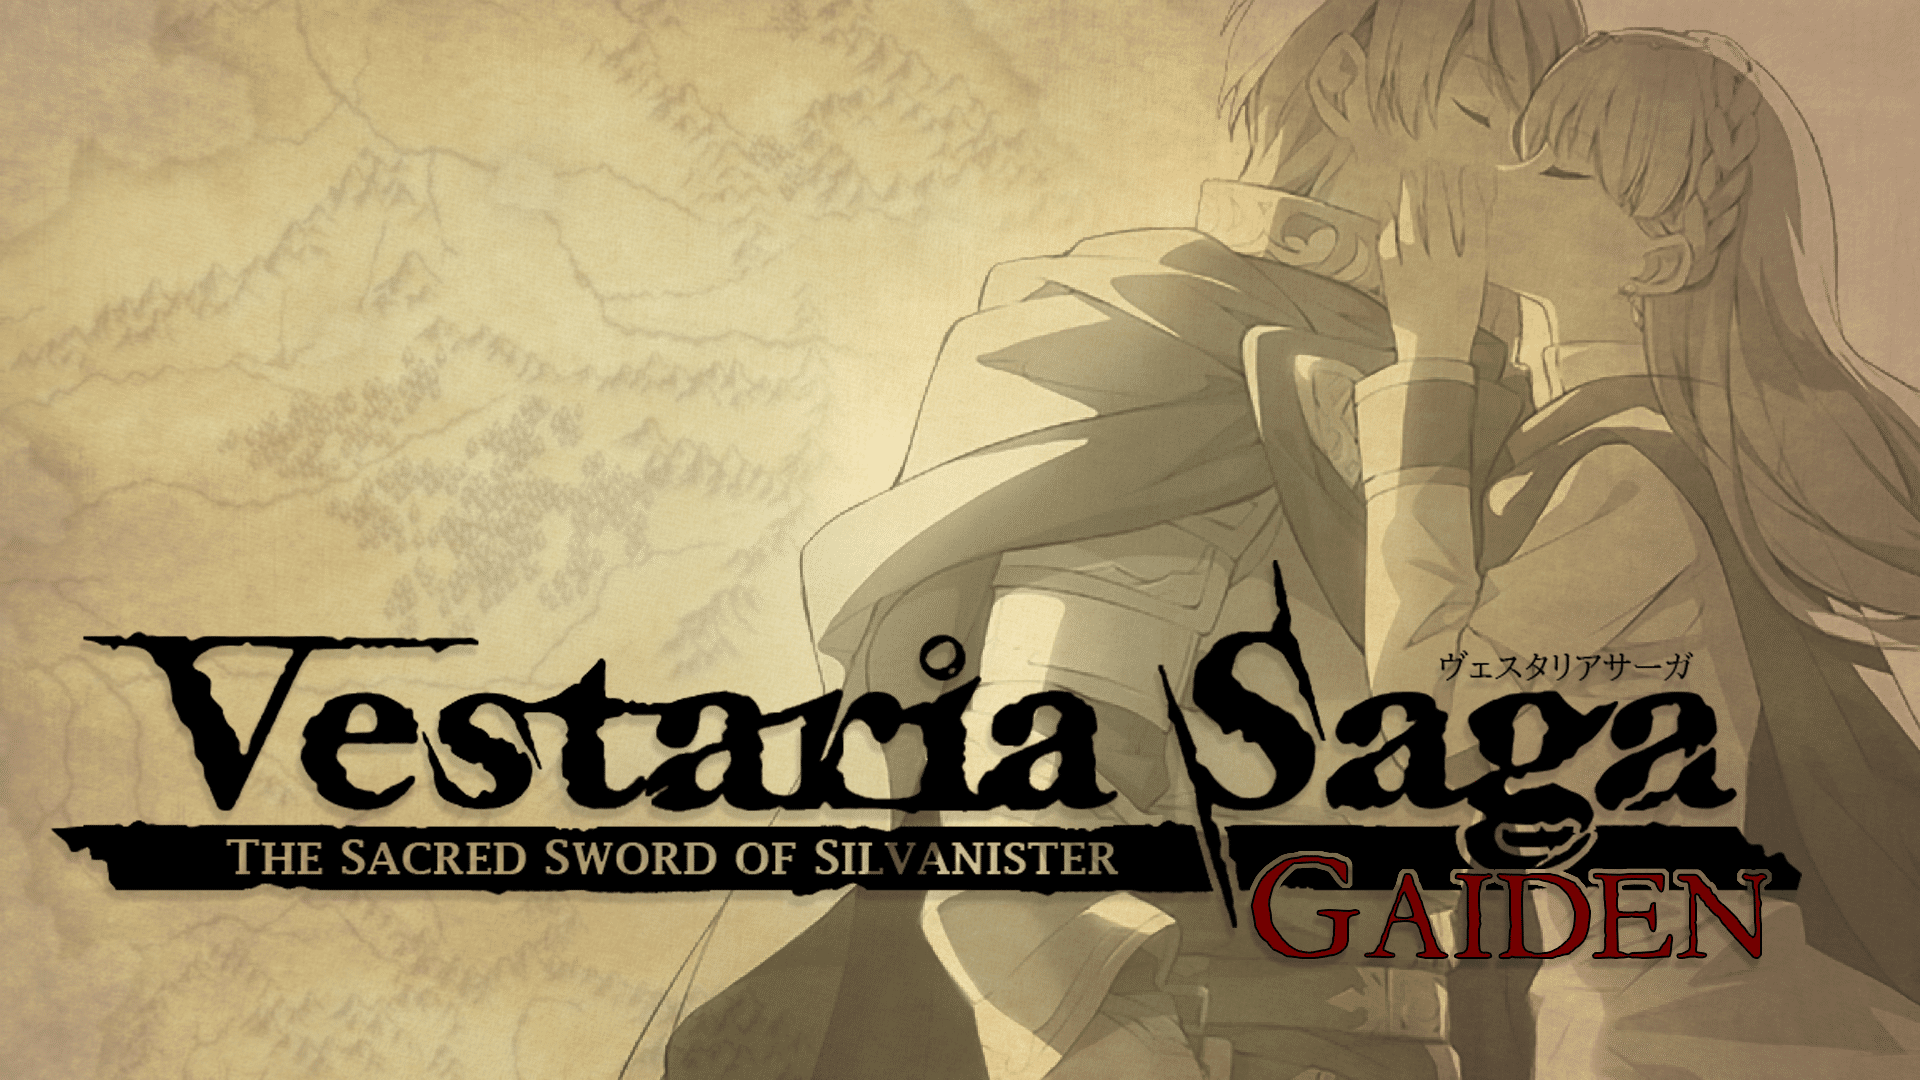 Tactical RPG ‘Vestaria Saga Gaiden’ Coming West to PC in 2022